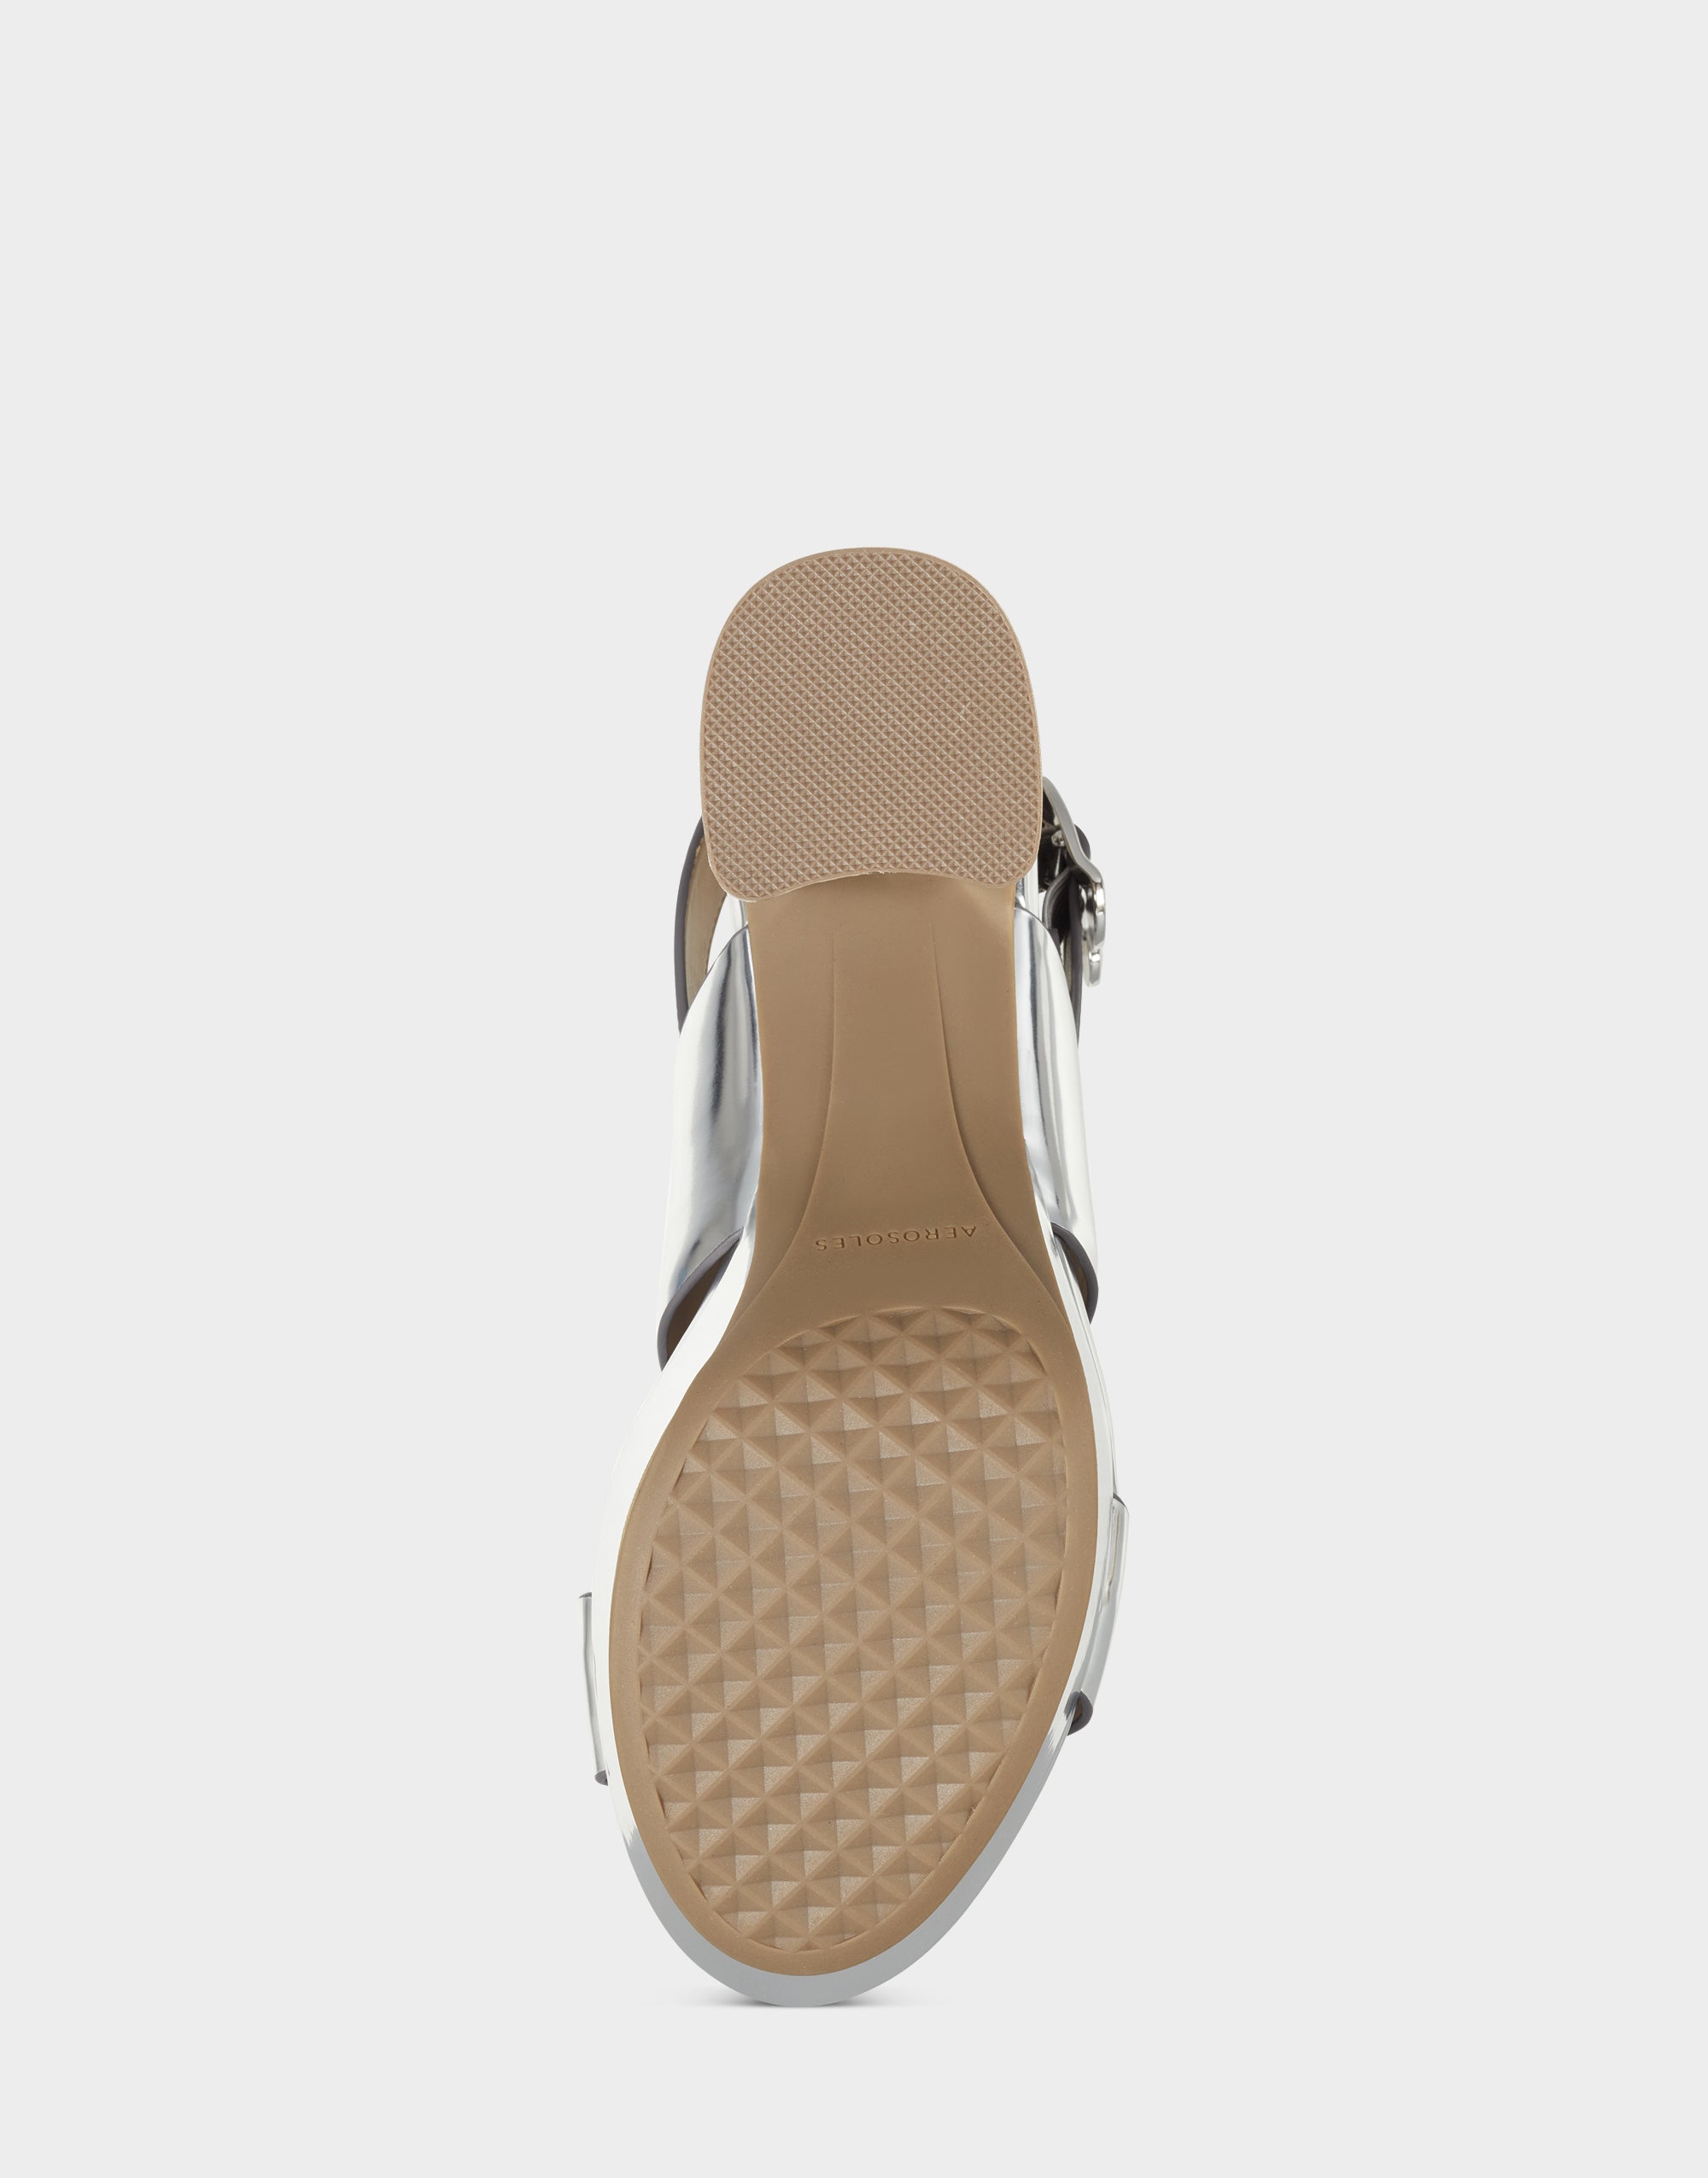 AFITO Black Heels Wide Width WomenSands Comfortable Stiletto Open Toe  Non-Slip Temperament Pumps Ankle-Strap Buckle With High Heels Shoes (Color  : 4doorswindow, Size : 1) price in Saudi Arabia | Amazon Saudi